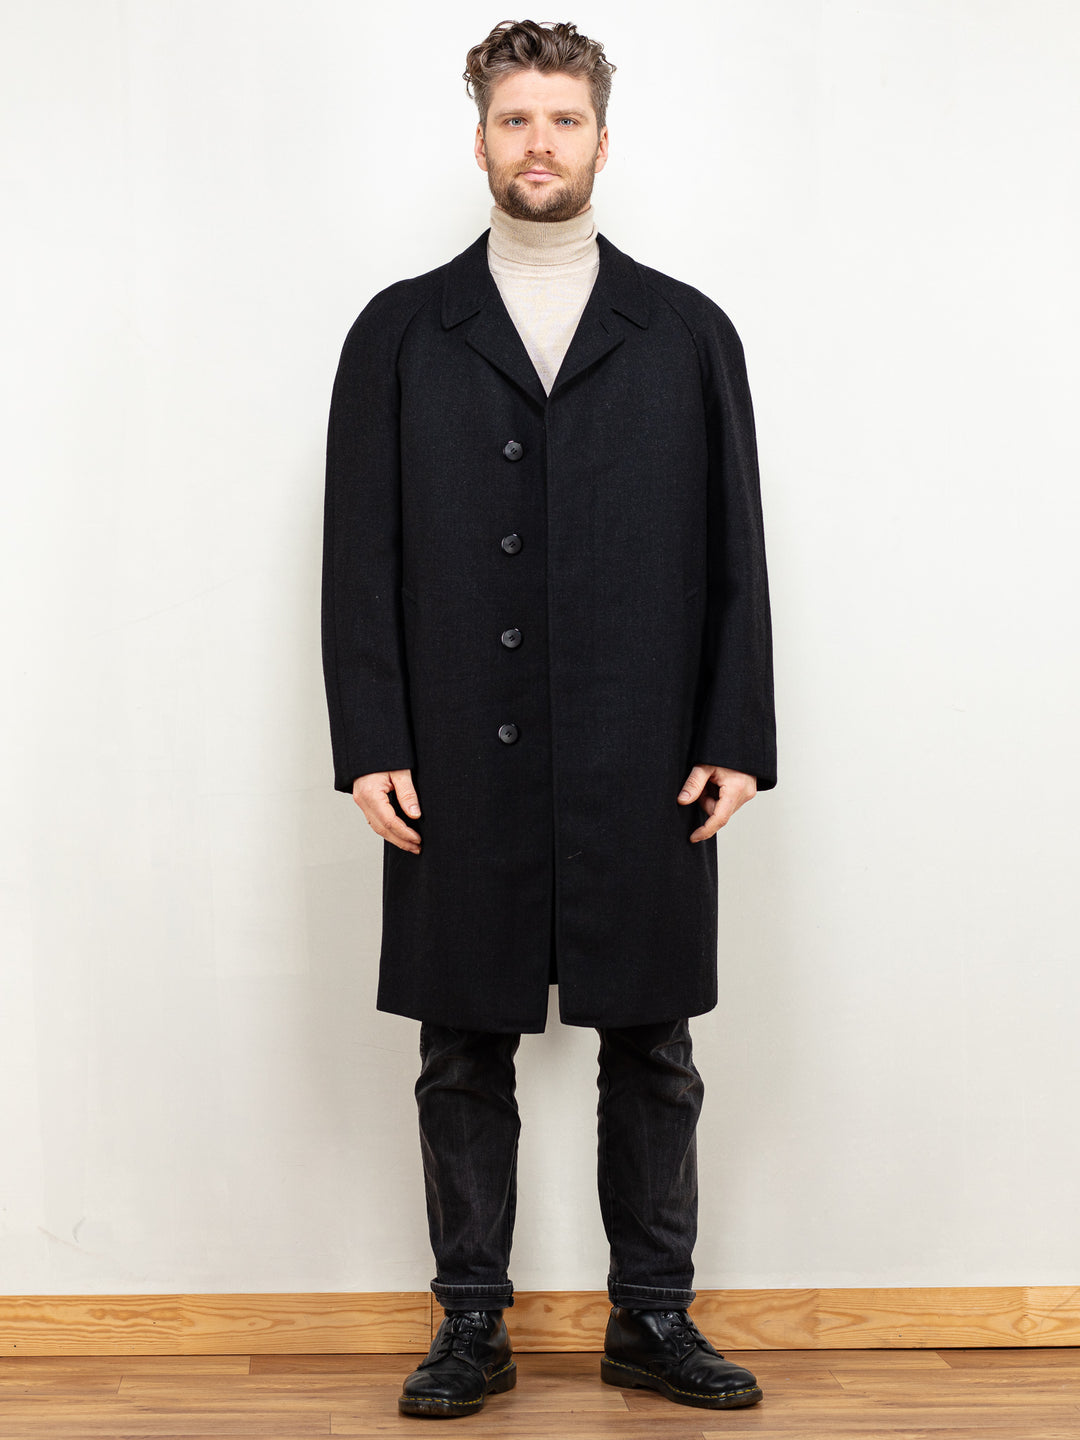 Men Wool Coat 80s dark grey wool blend overcoat classic smart casual tweed style 80s minimalistic preppy style outerwear size large